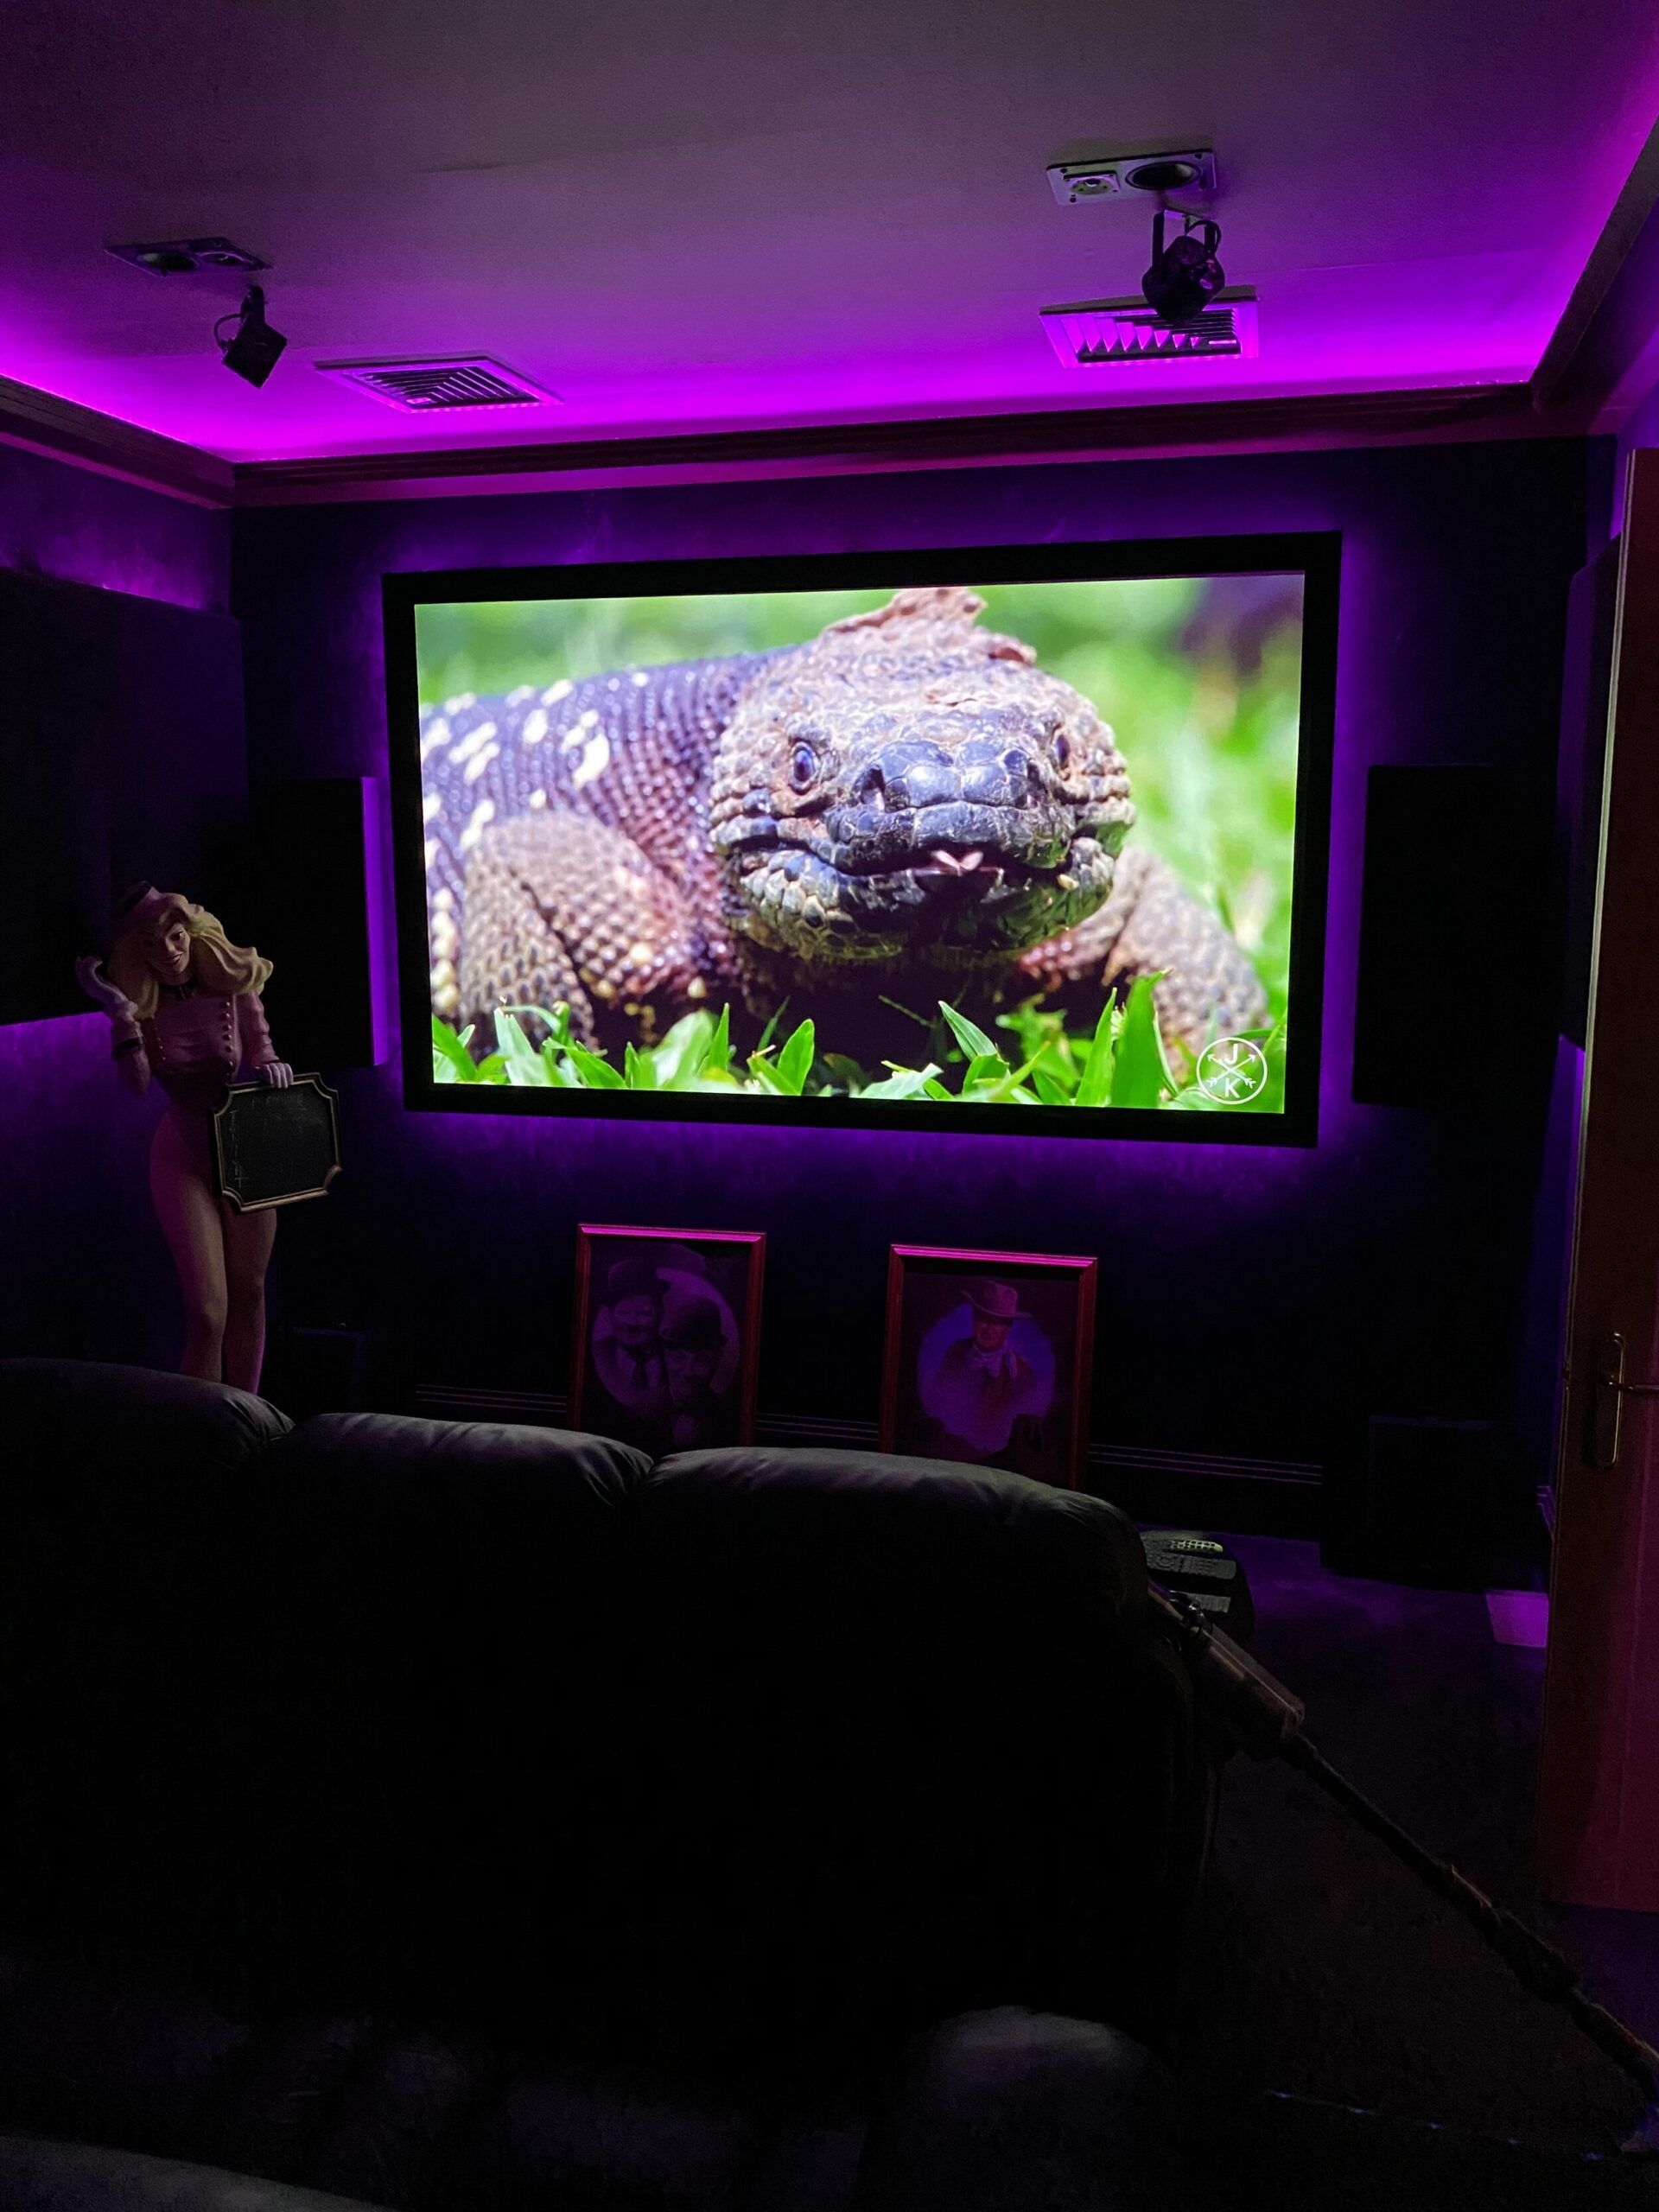 Home cinema, cinema inspiration, projector